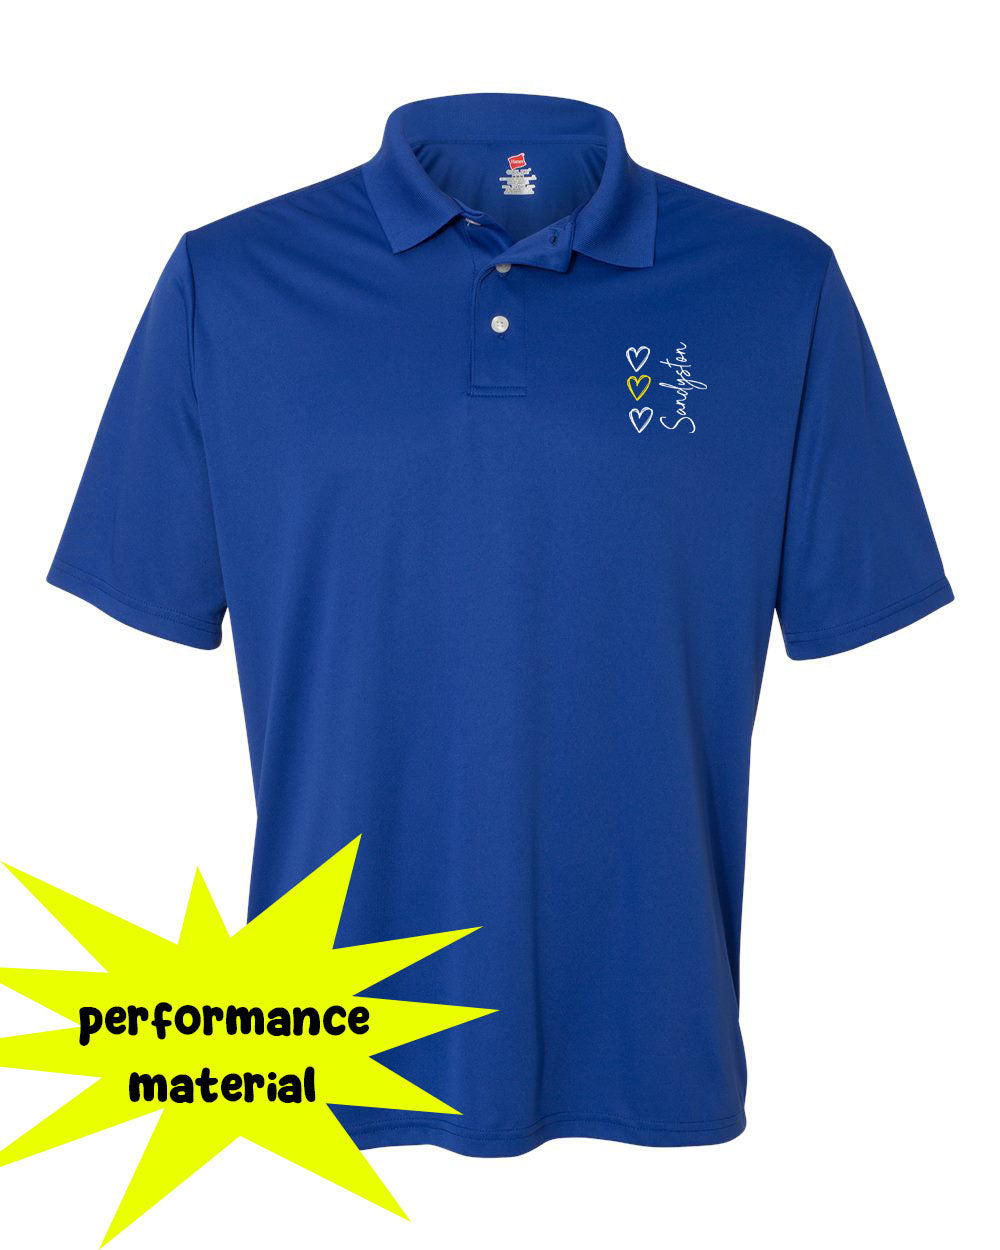 Sandyston Walpack Design 18 Performance Material Polo T-Shirt